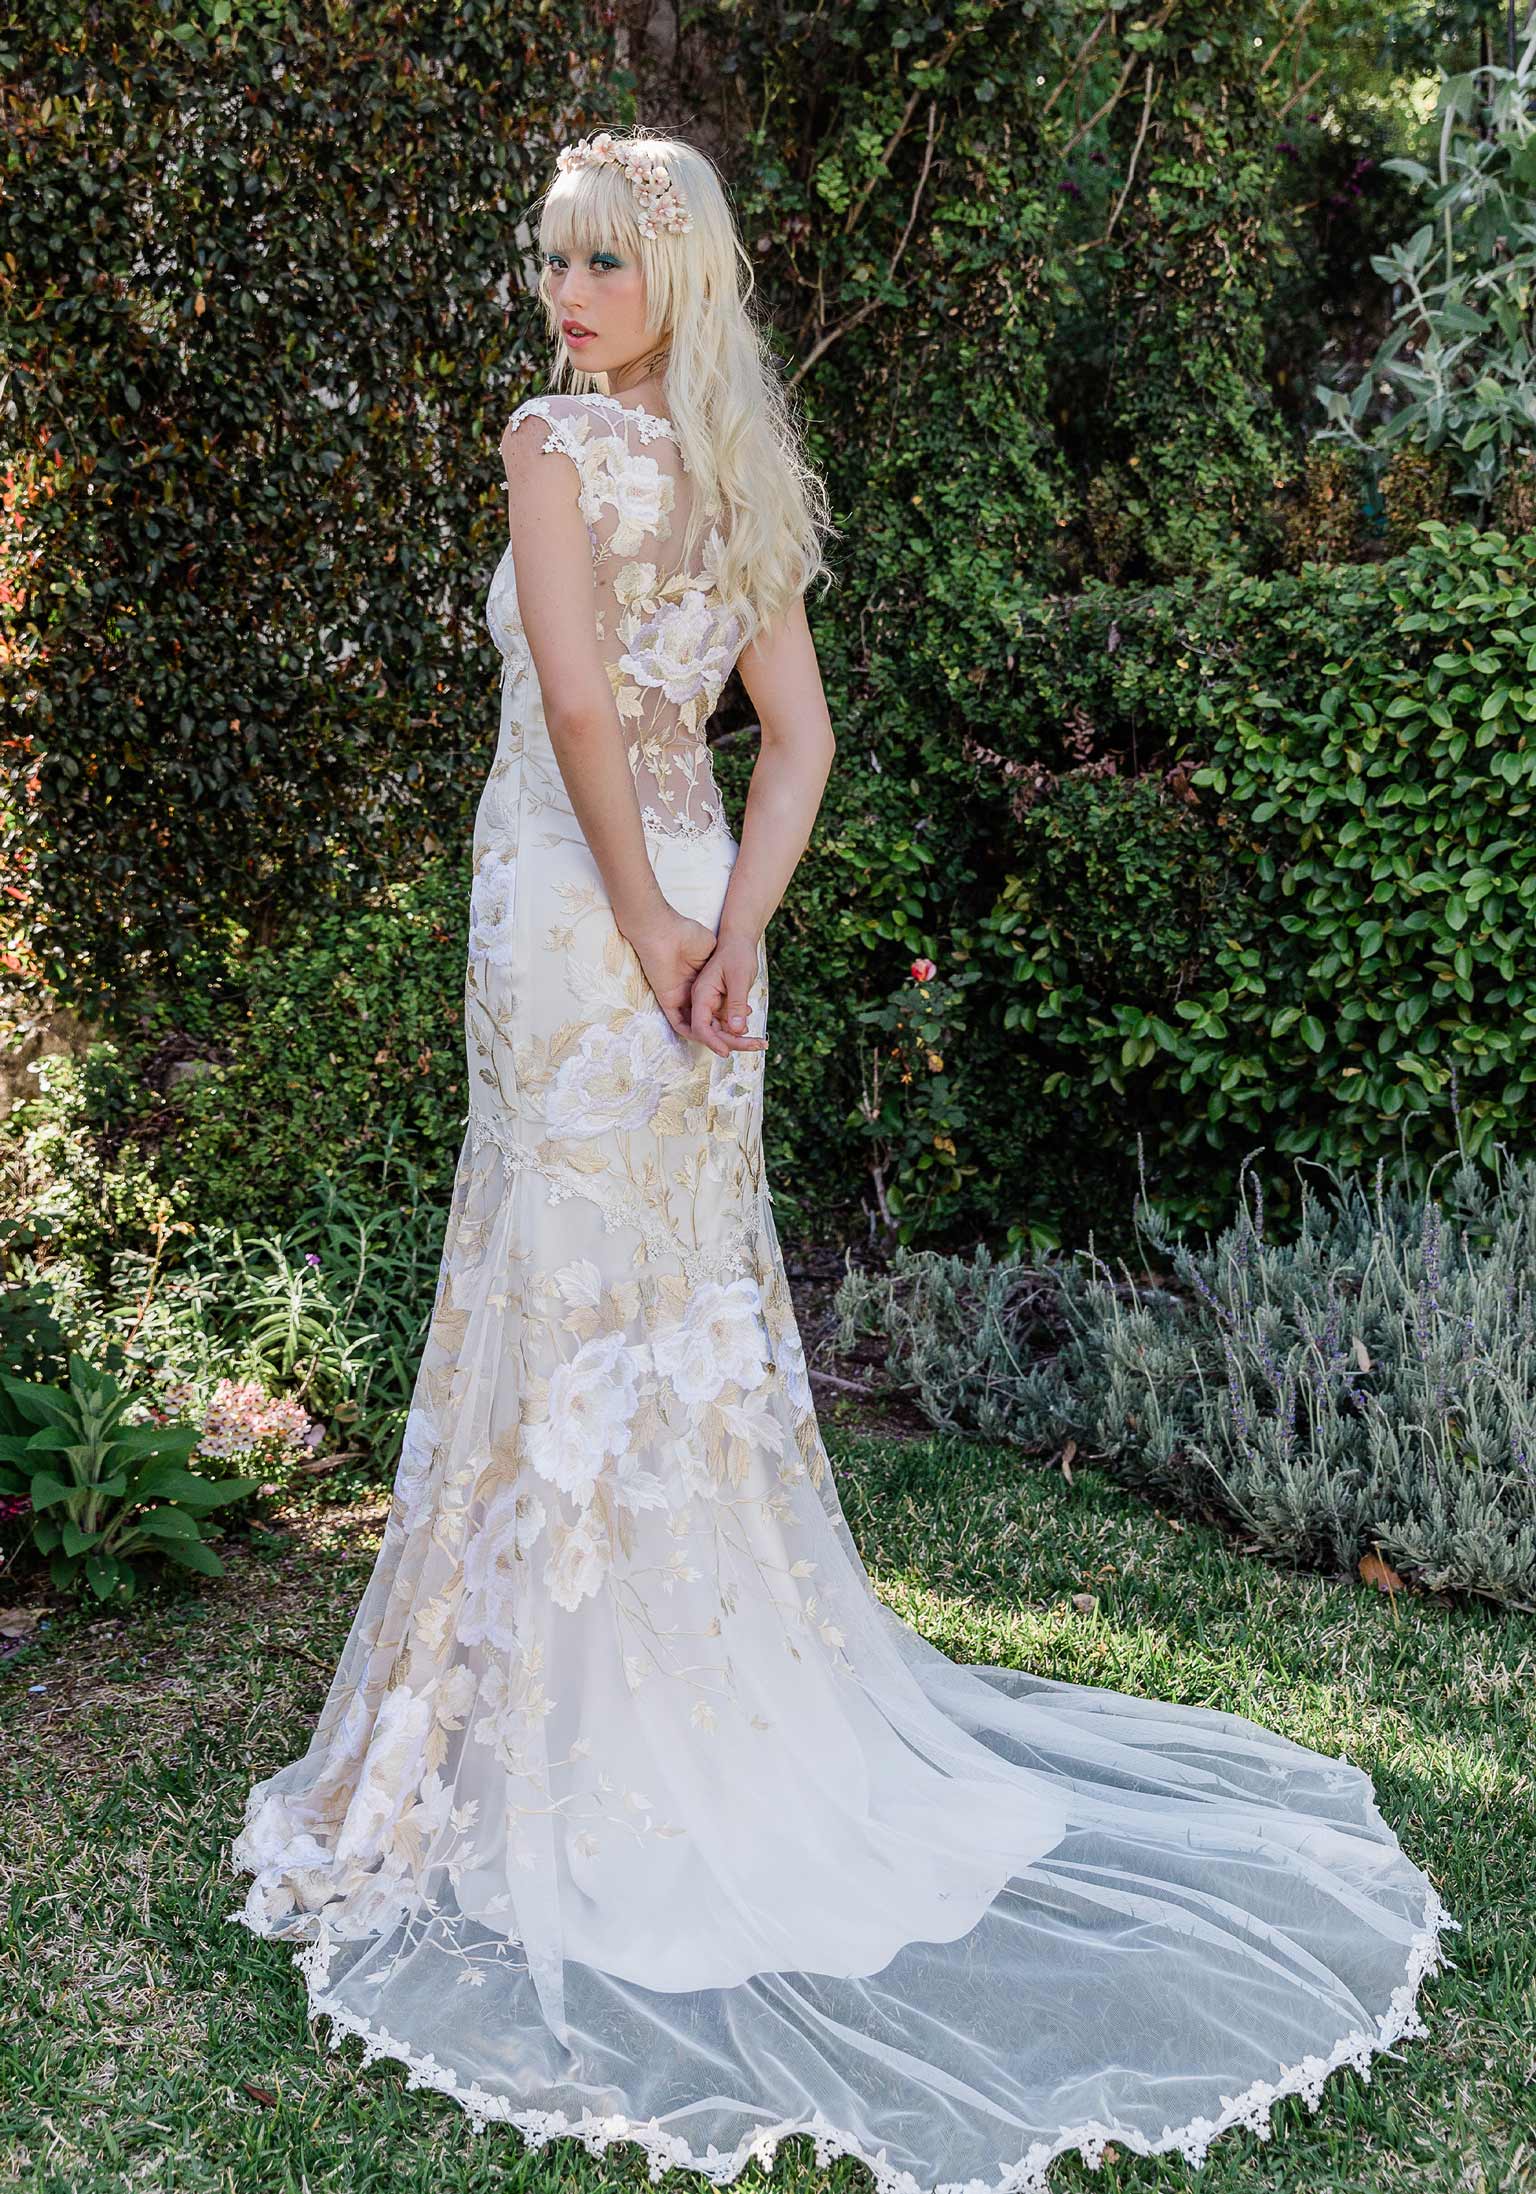 Eridana simple corset wedding dress - Bridal gown - Strapless wedding gown  - Summer wedding i… | Wedding dress with pockets, Bridal dresses, Ball gown  wedding dress